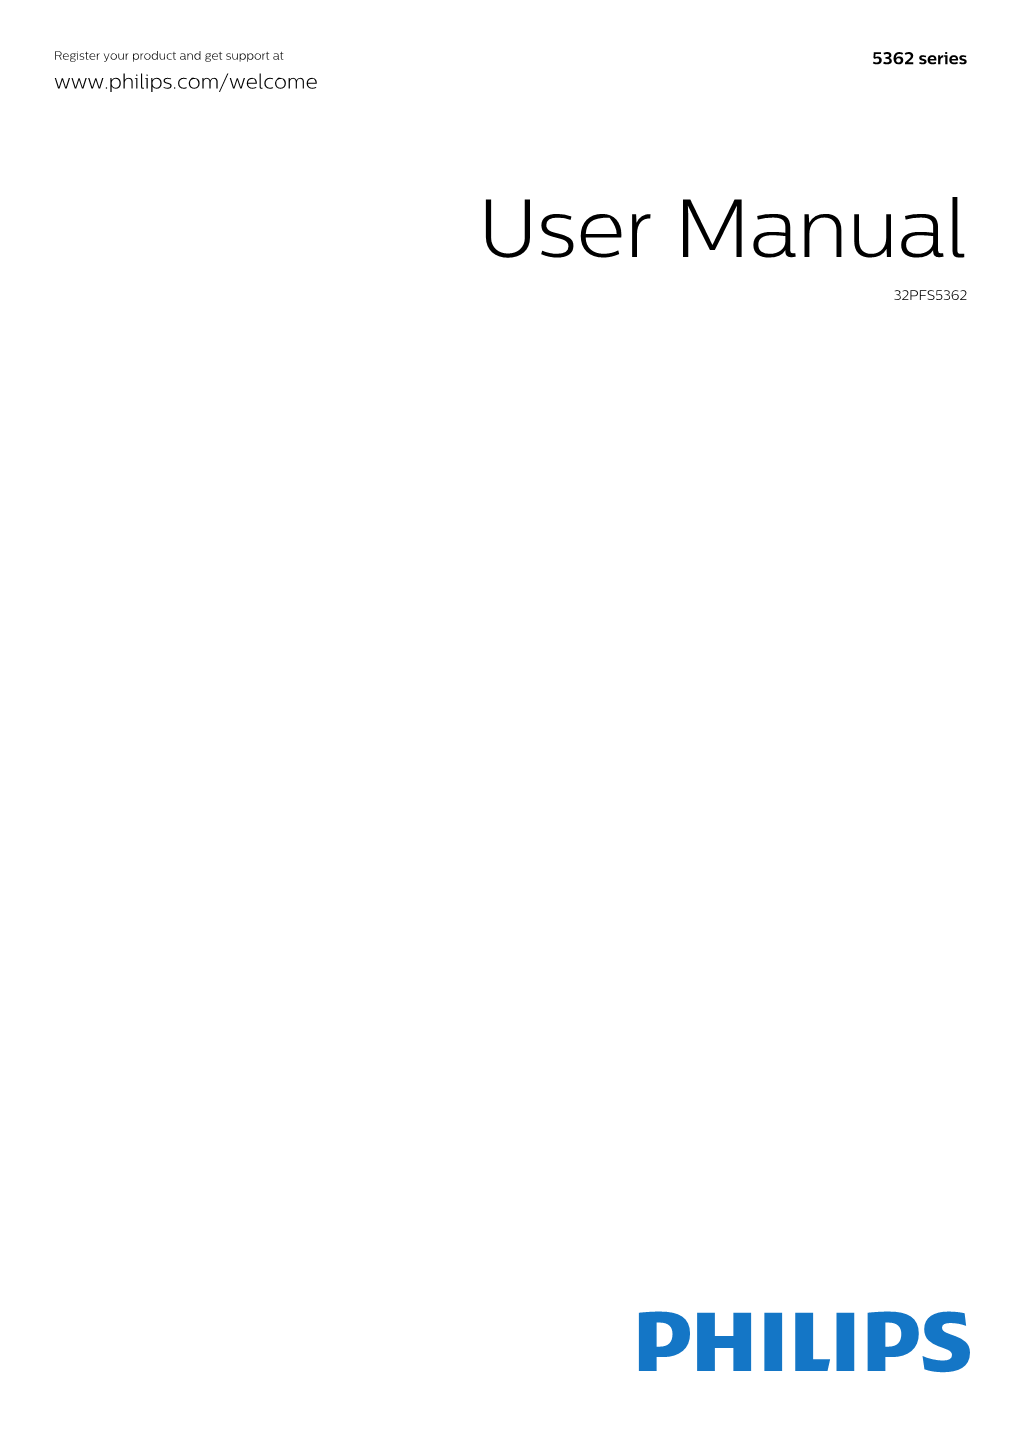 User Manual 32PFS5362 Contents